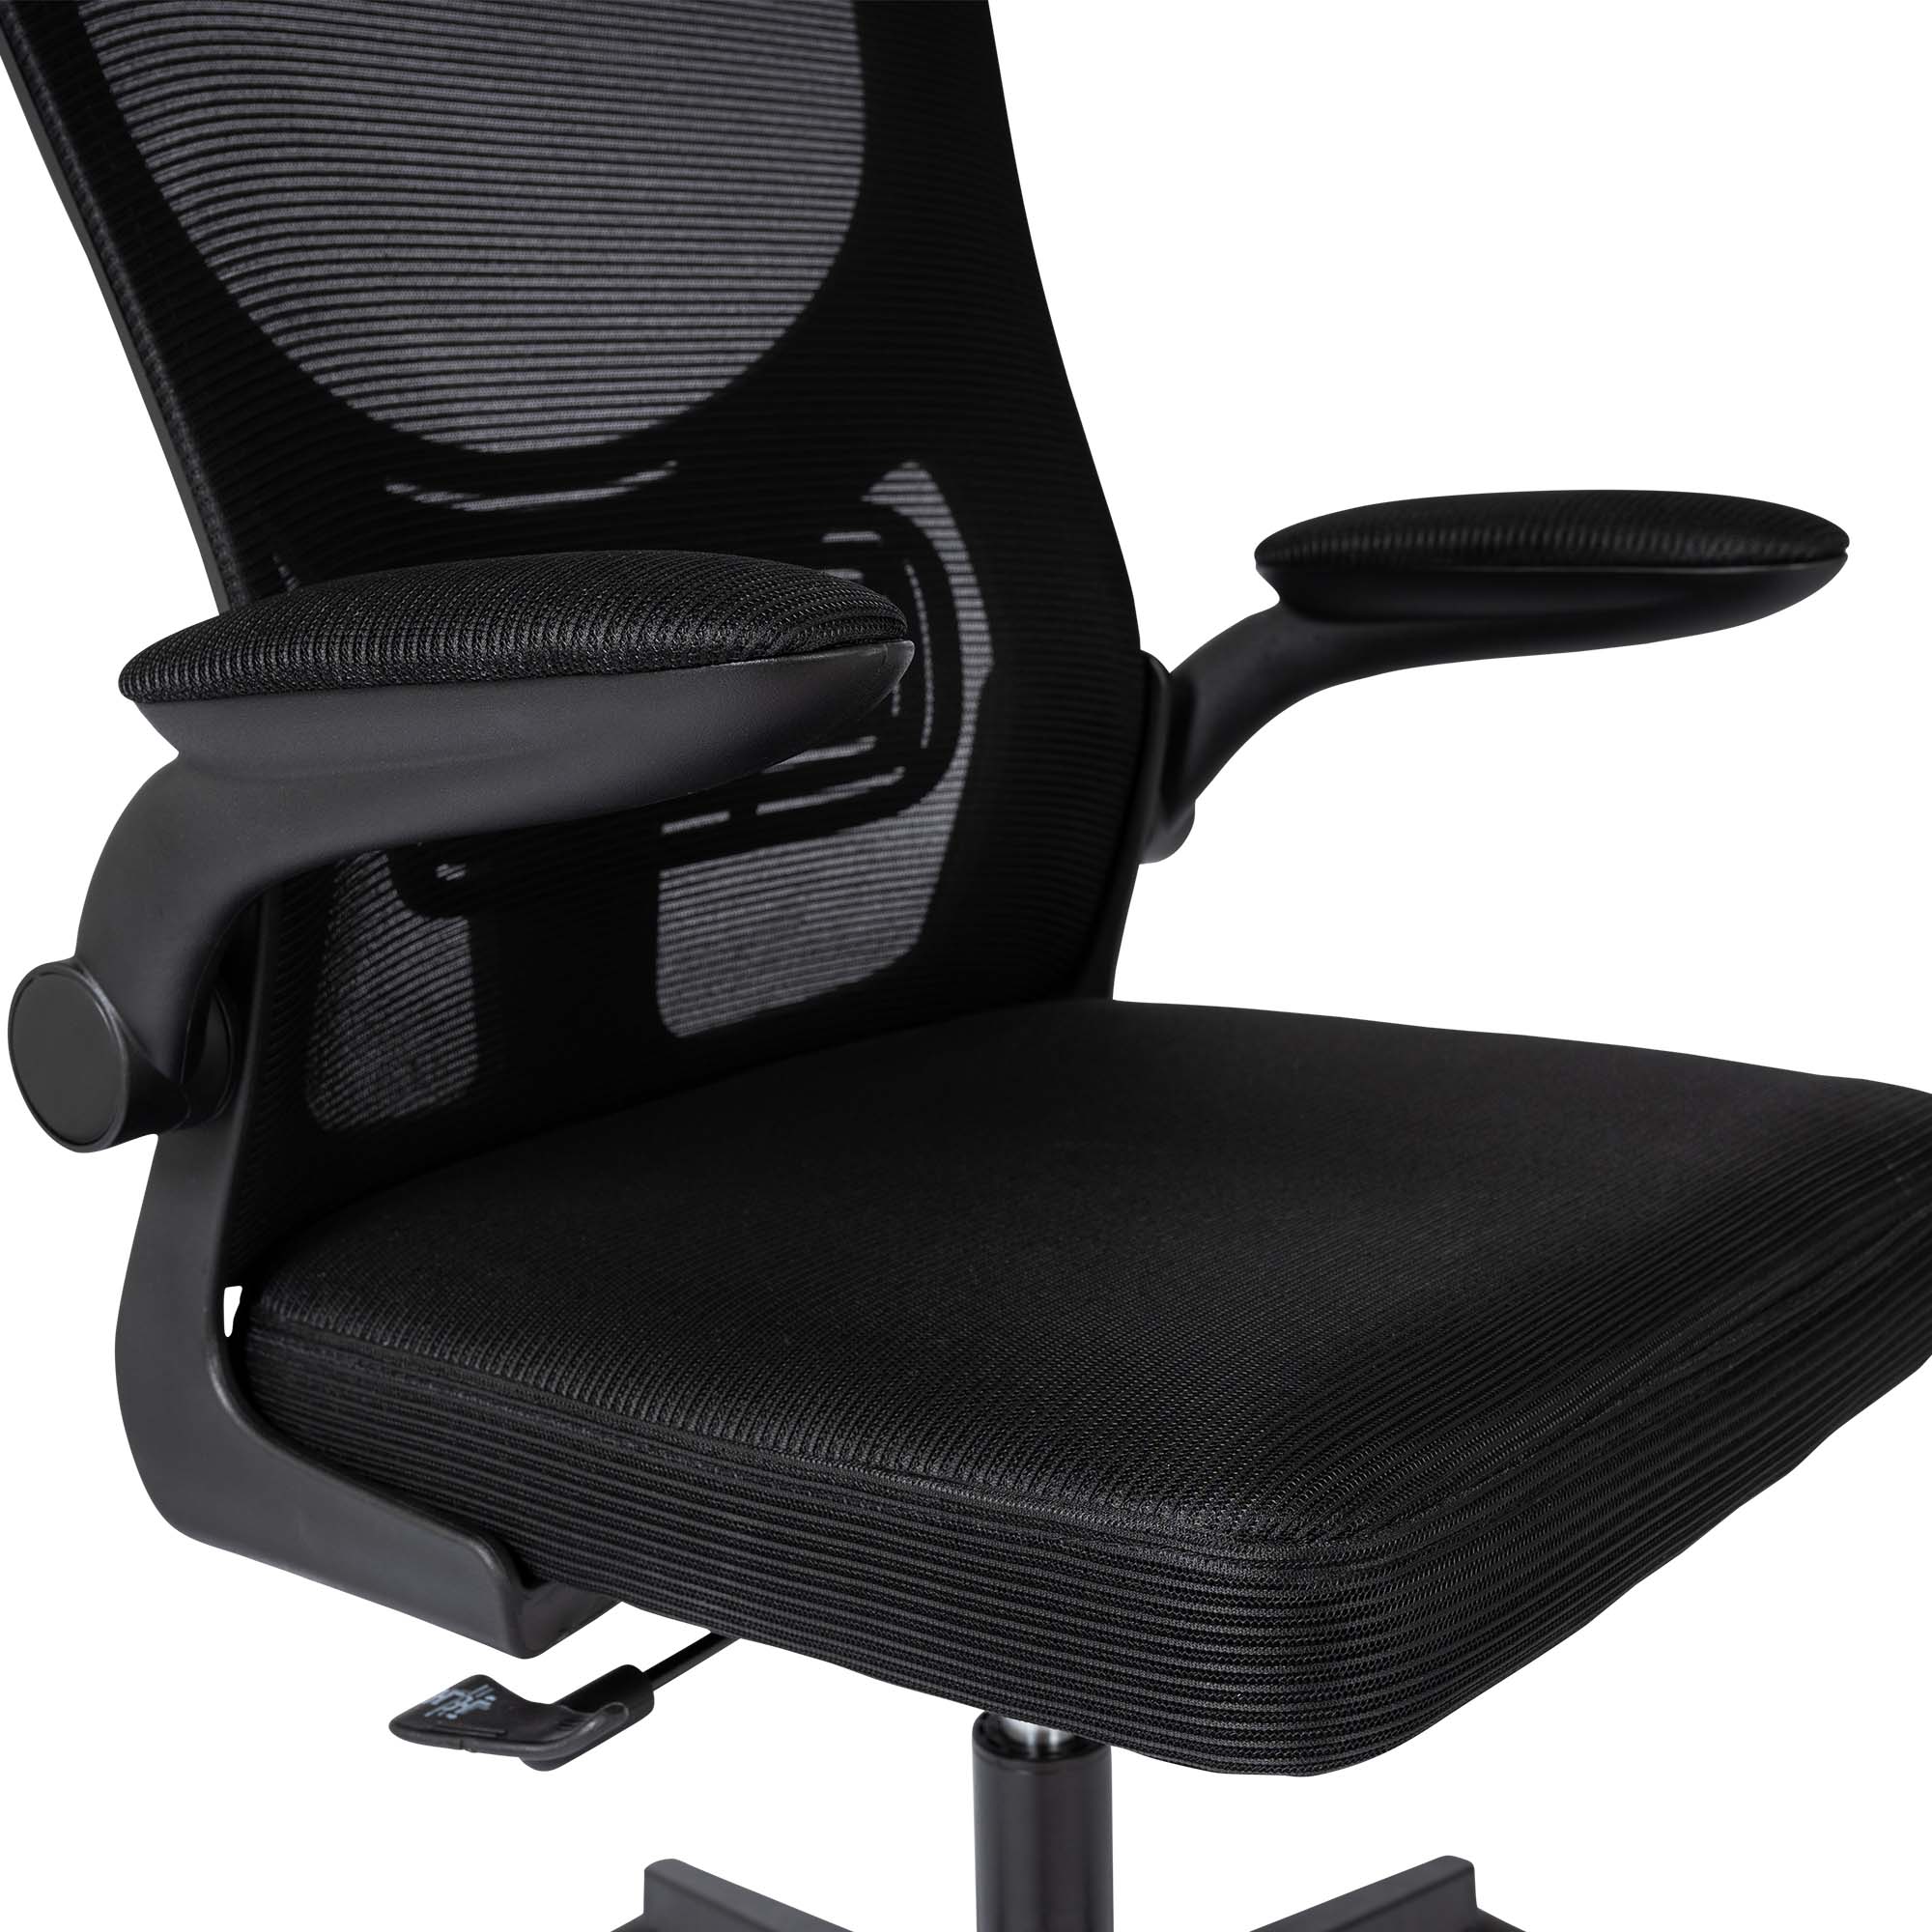 Ergodu Ergonomic Office Chair with Foldable Armrests - seat